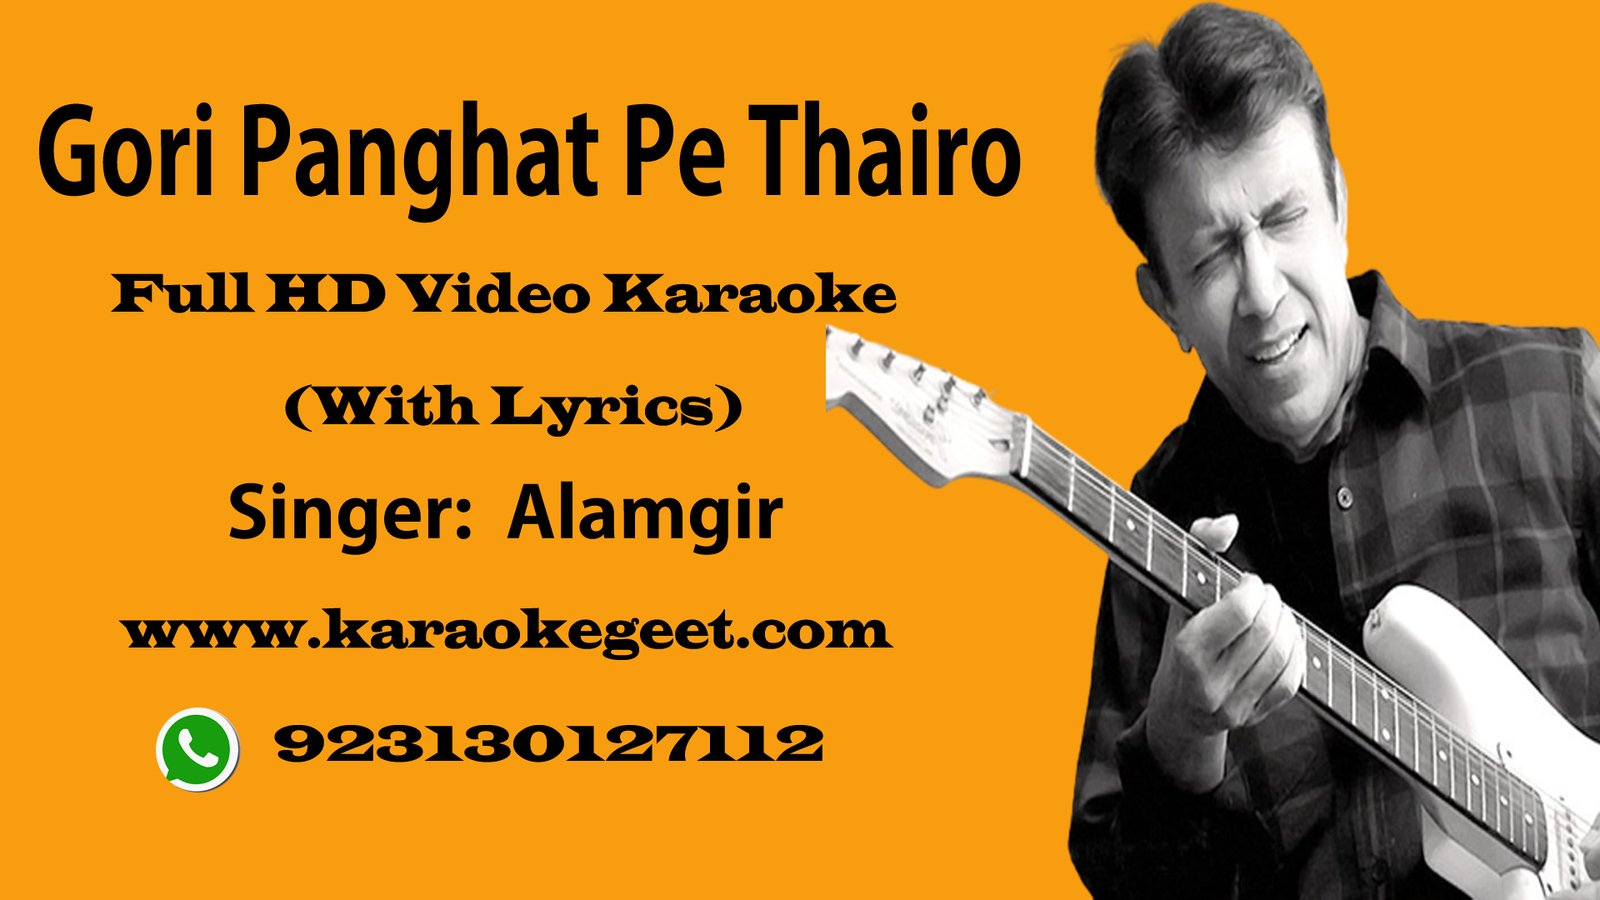 Gori panghat pe thairo ghar nahi jaao Video Karaoke